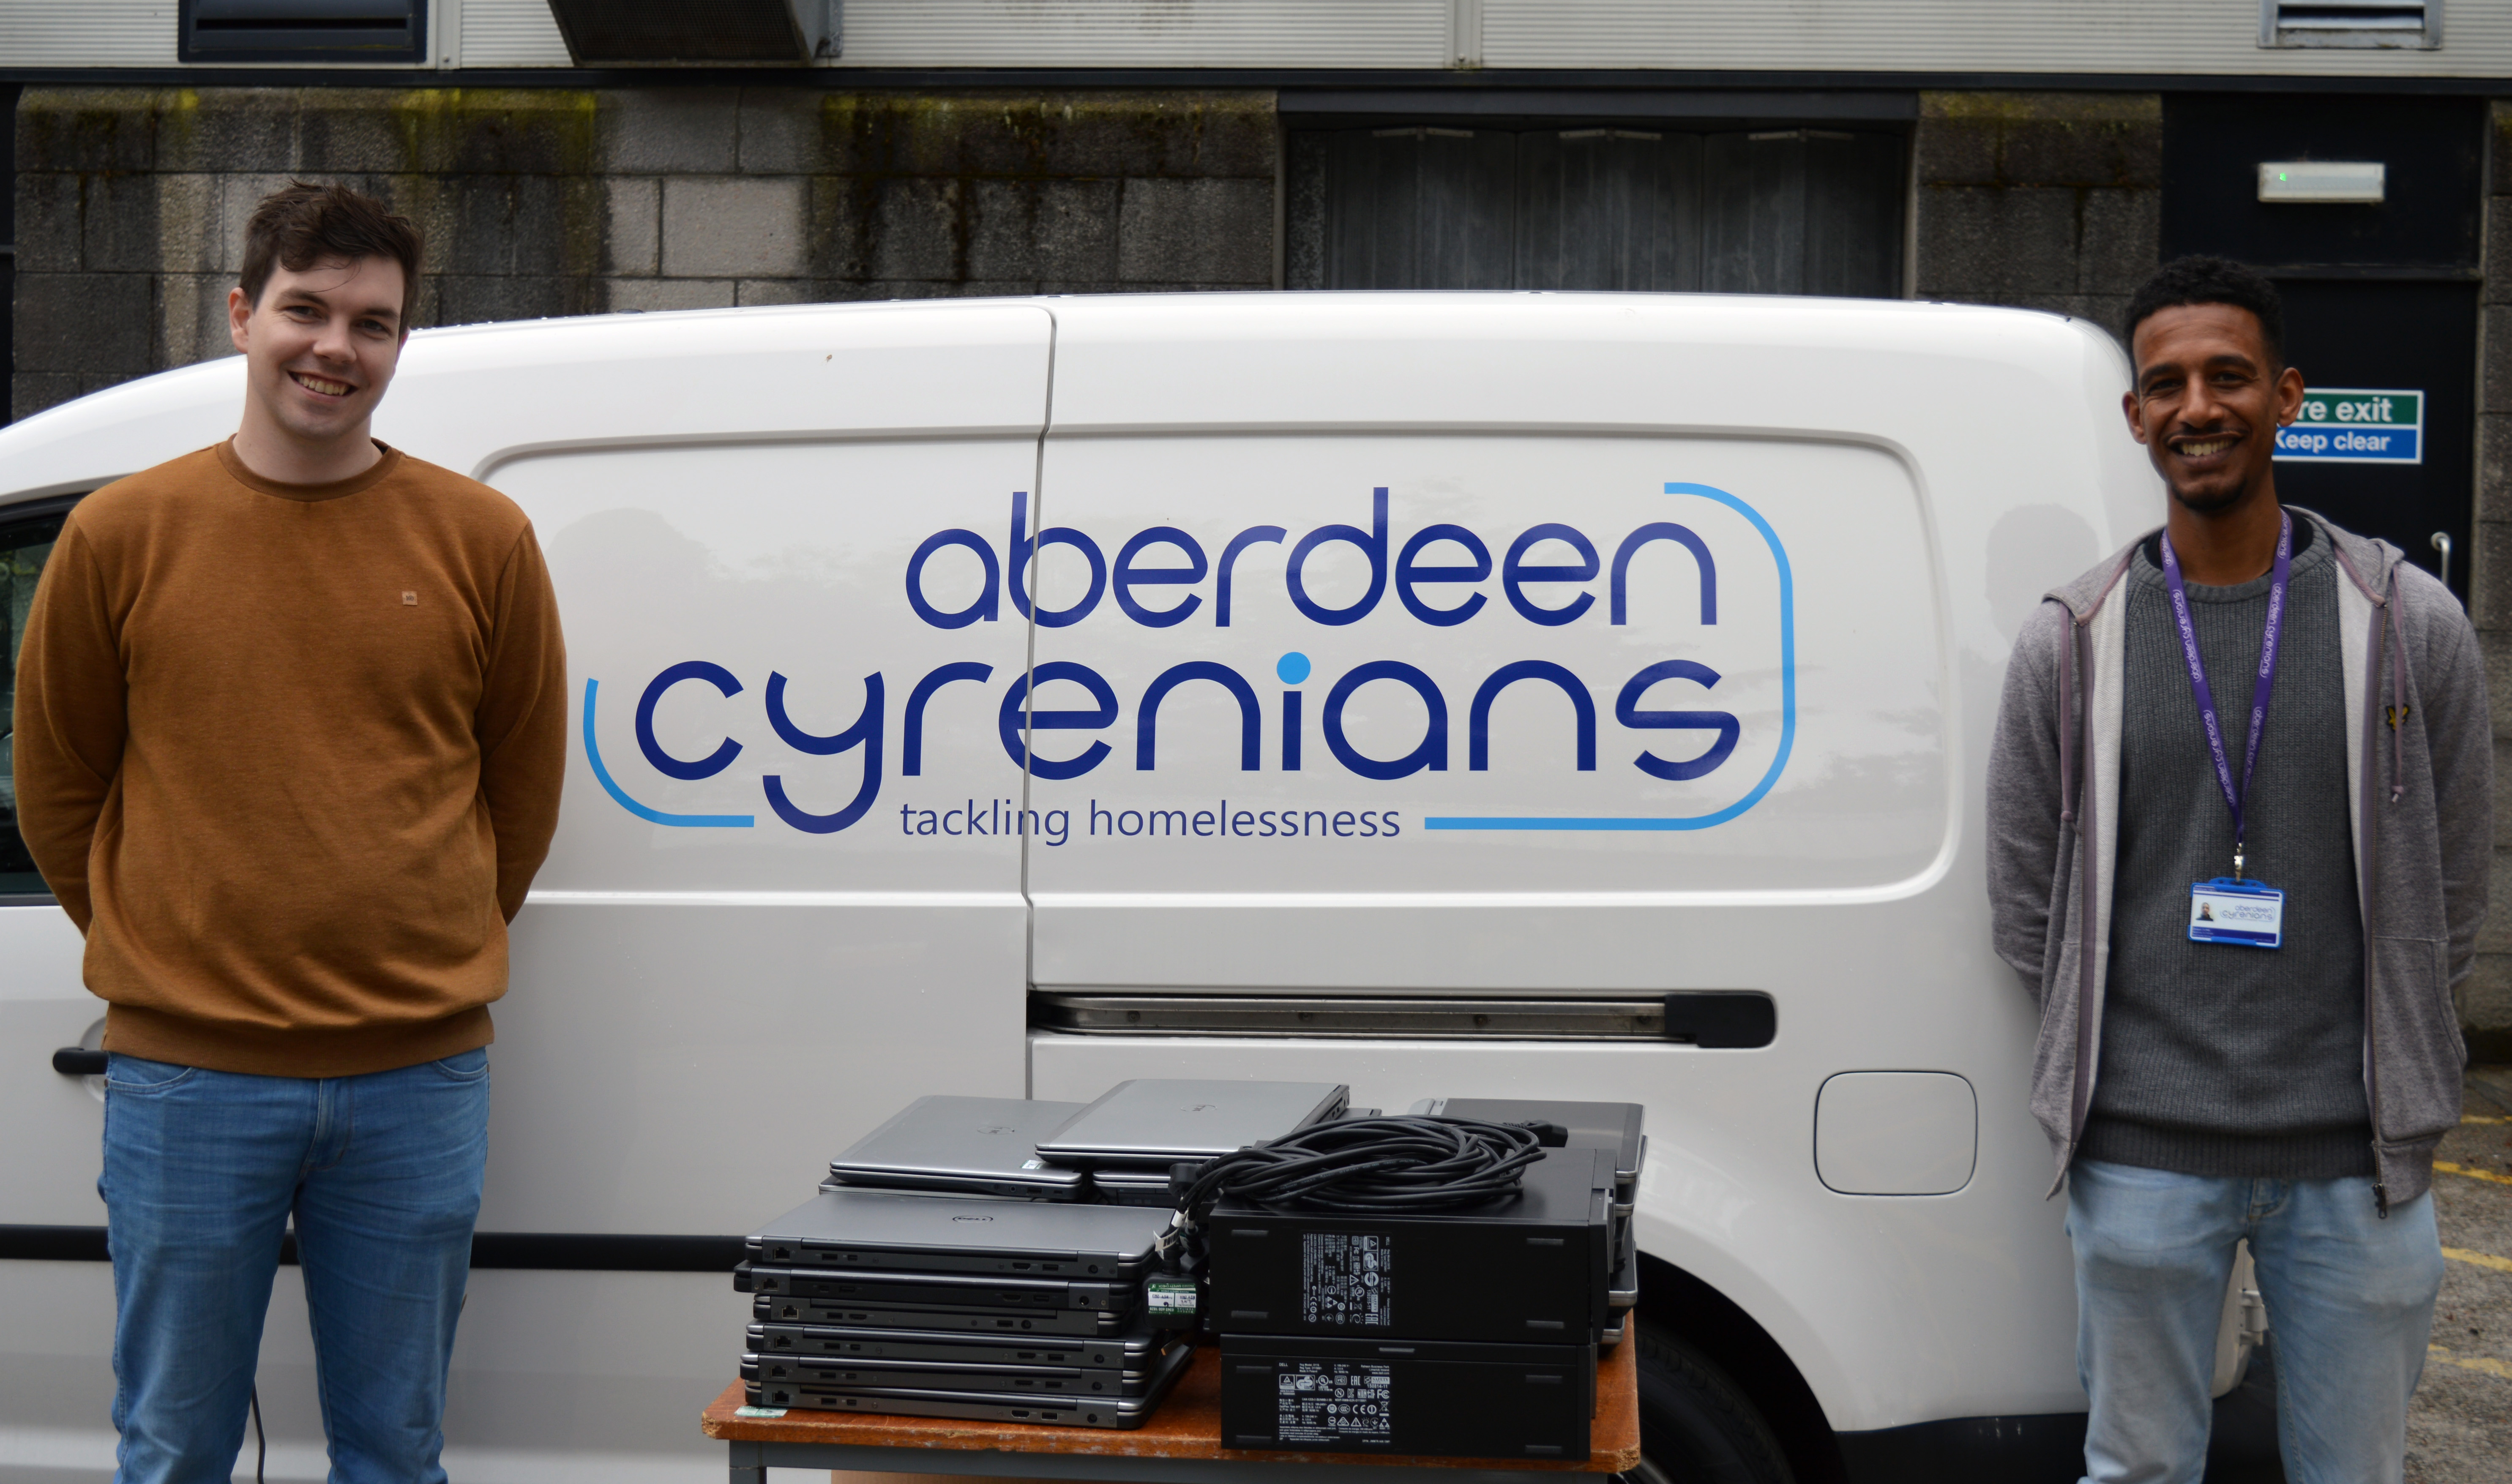 James Hutton Institute donates laptops to Aberdeen Cyrenians